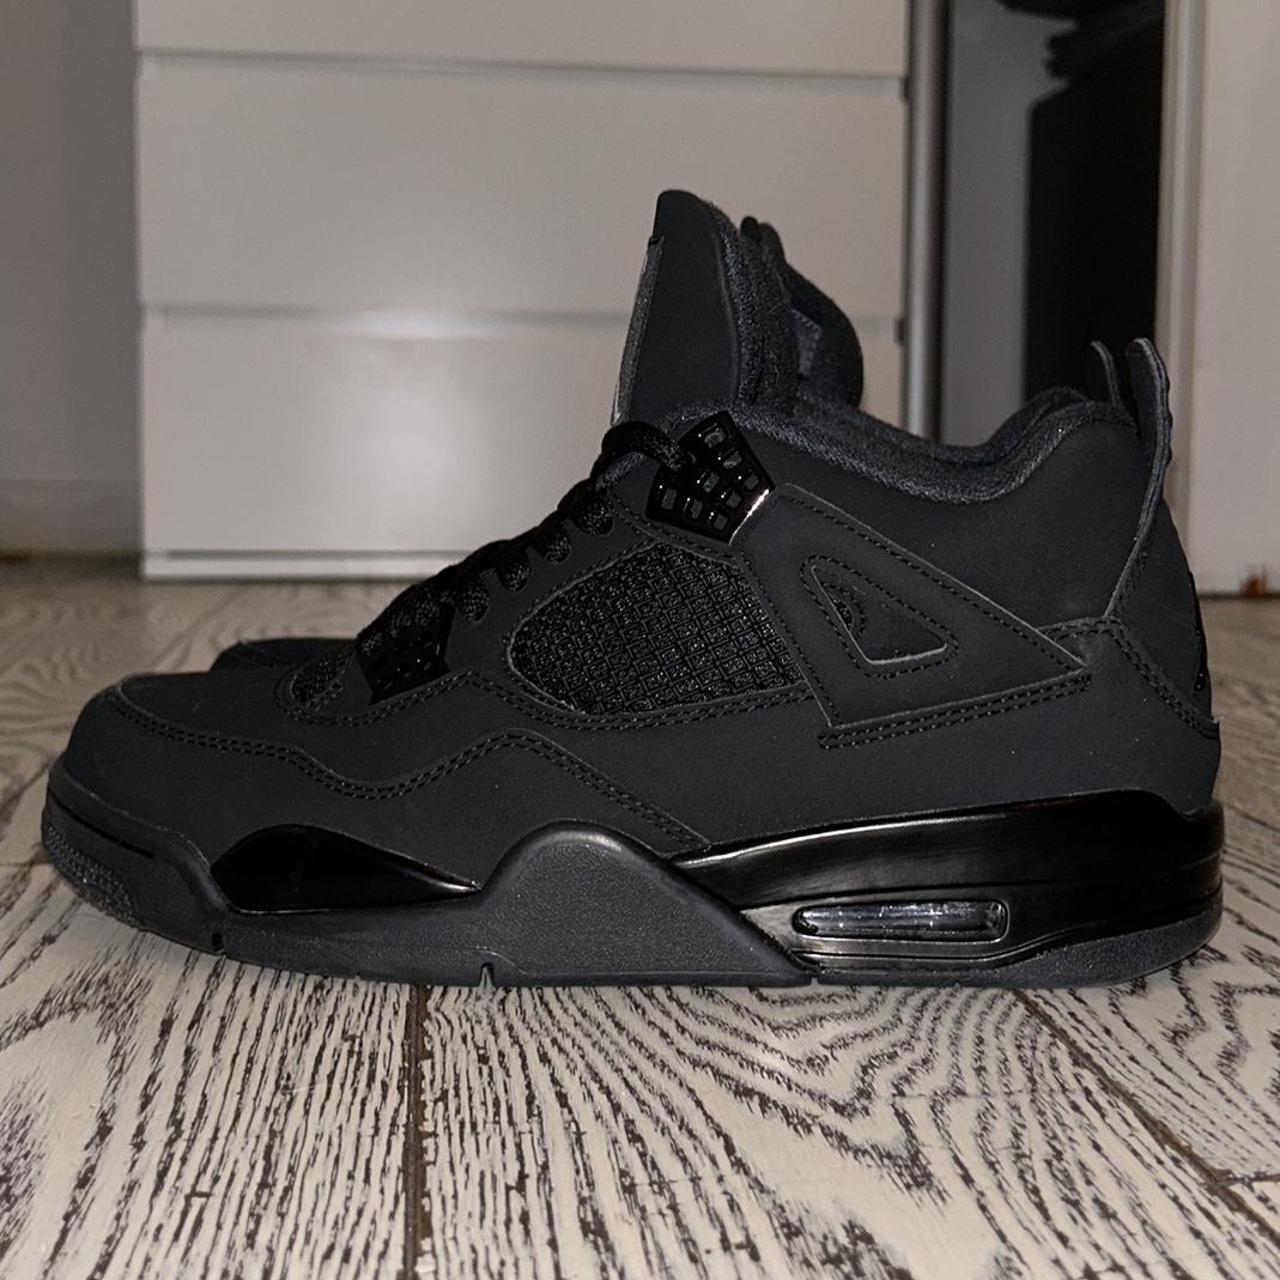 Air Jordan Black Cat Shoes for Boys Sizes (4+)